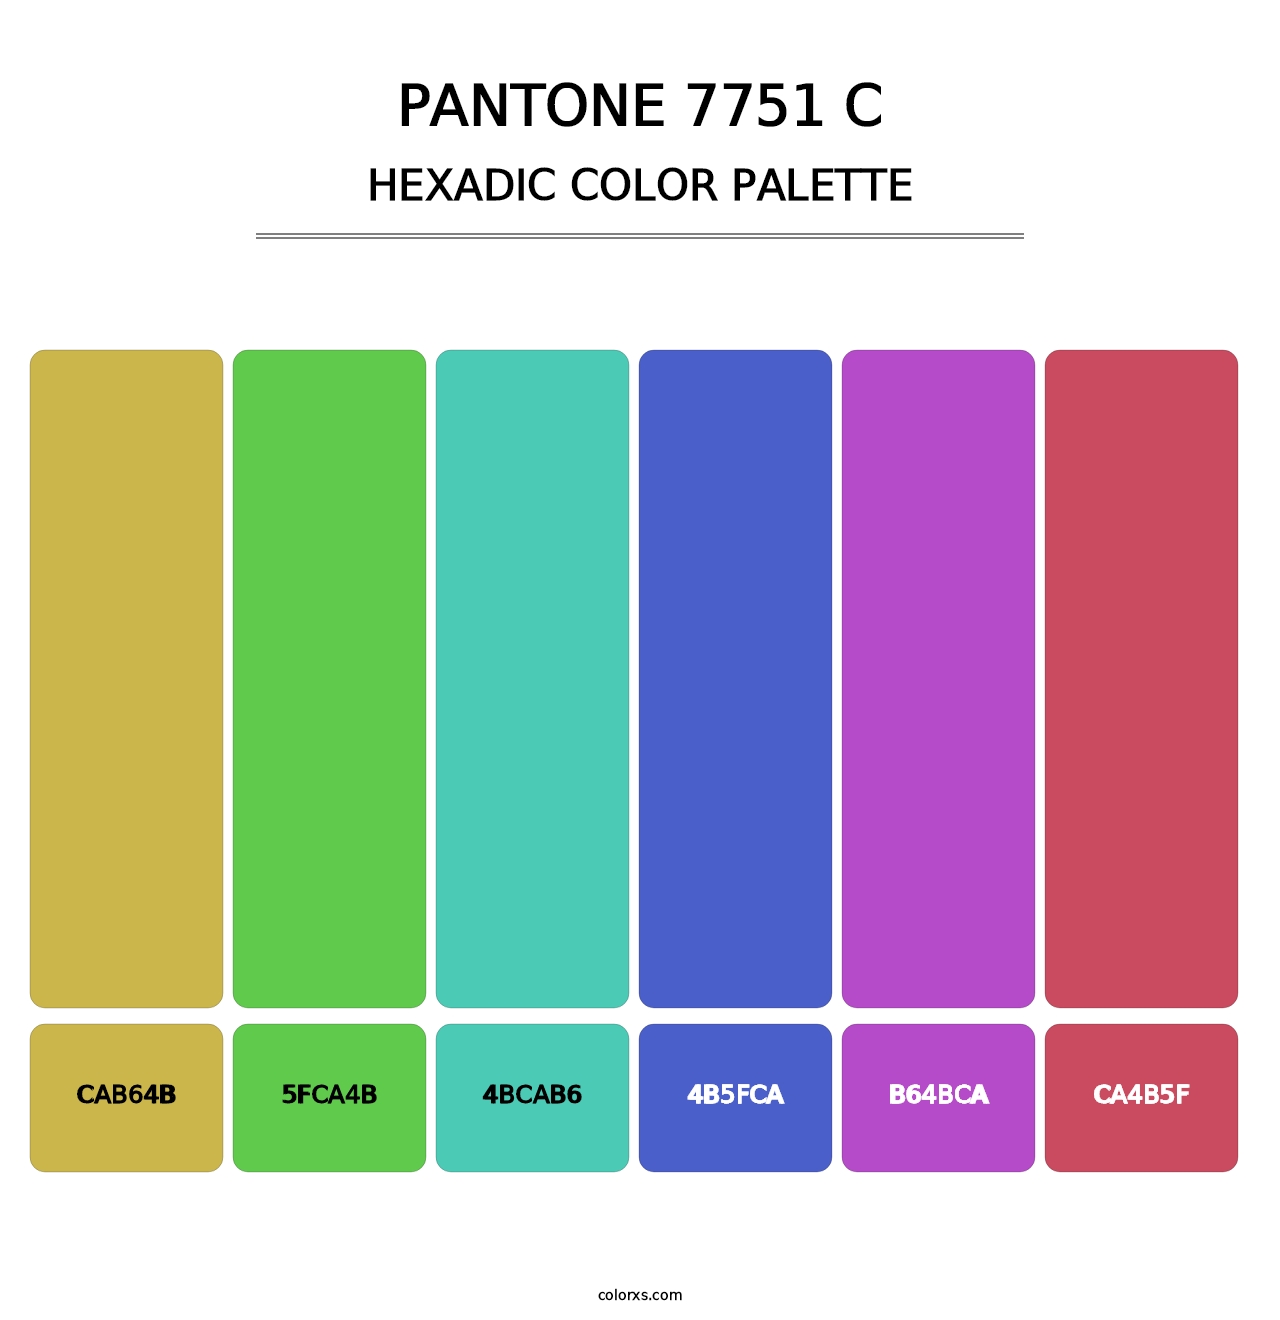 PANTONE 7751 C - Hexadic Color Palette